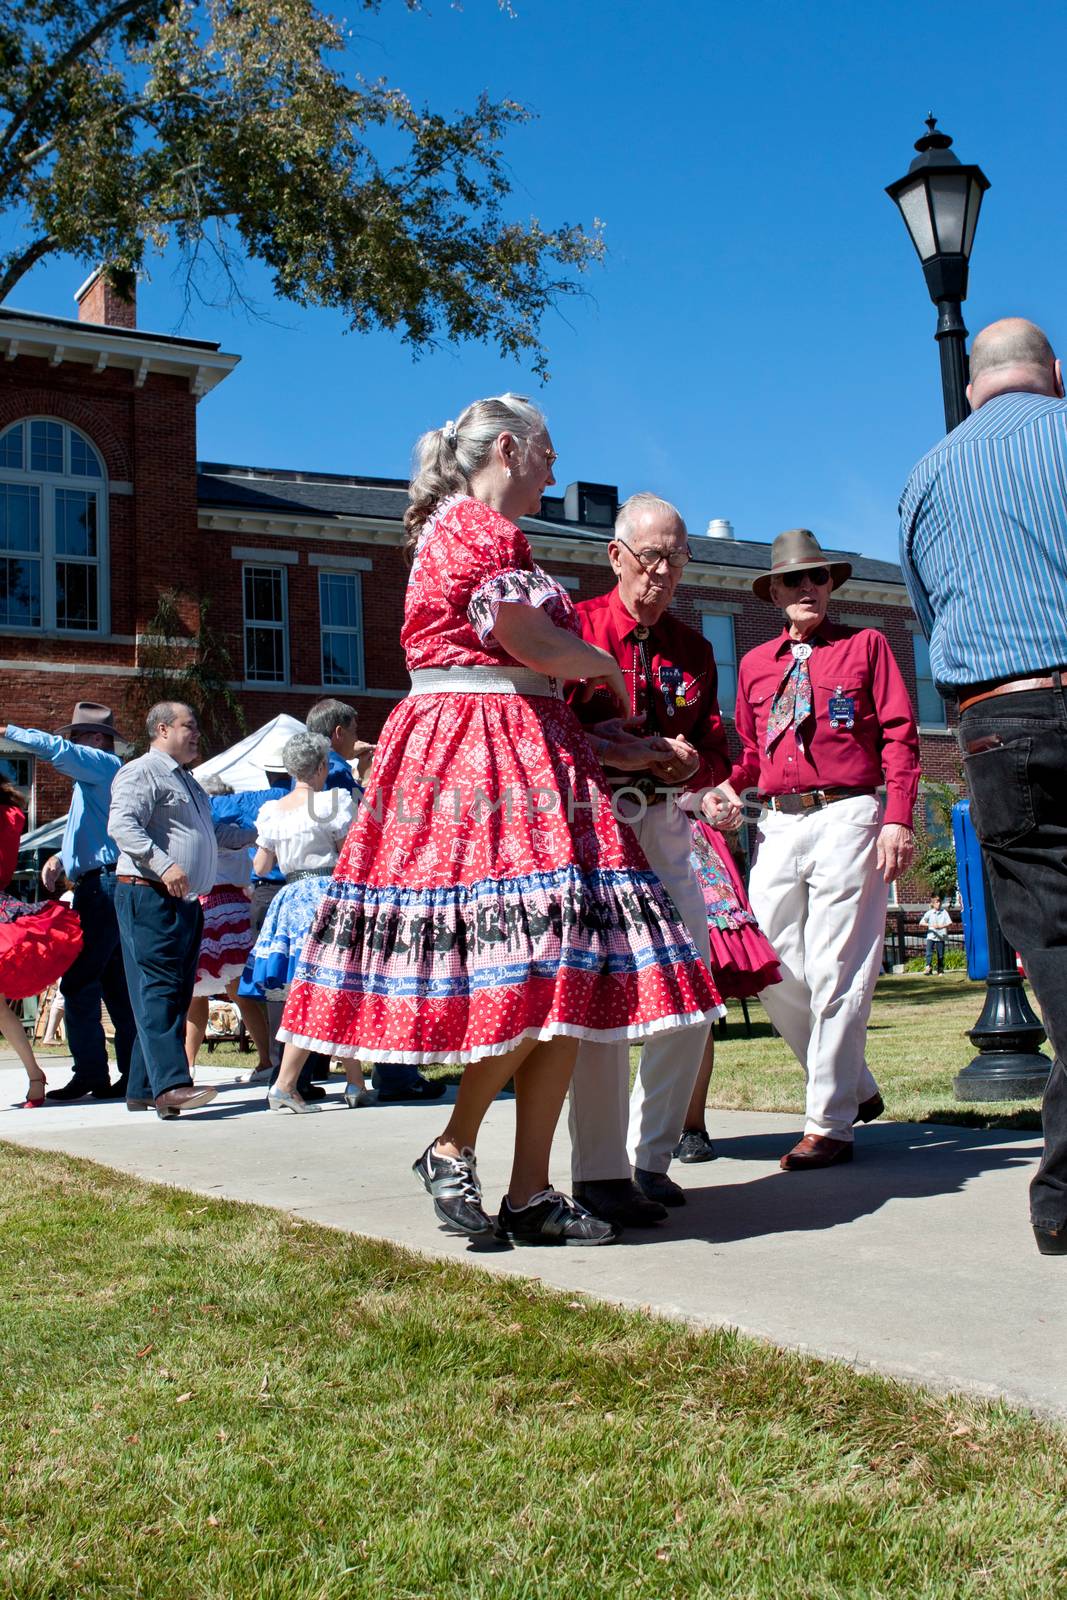 Senior Citizen Couple Square Dances At Outdoor Event by BluIz60